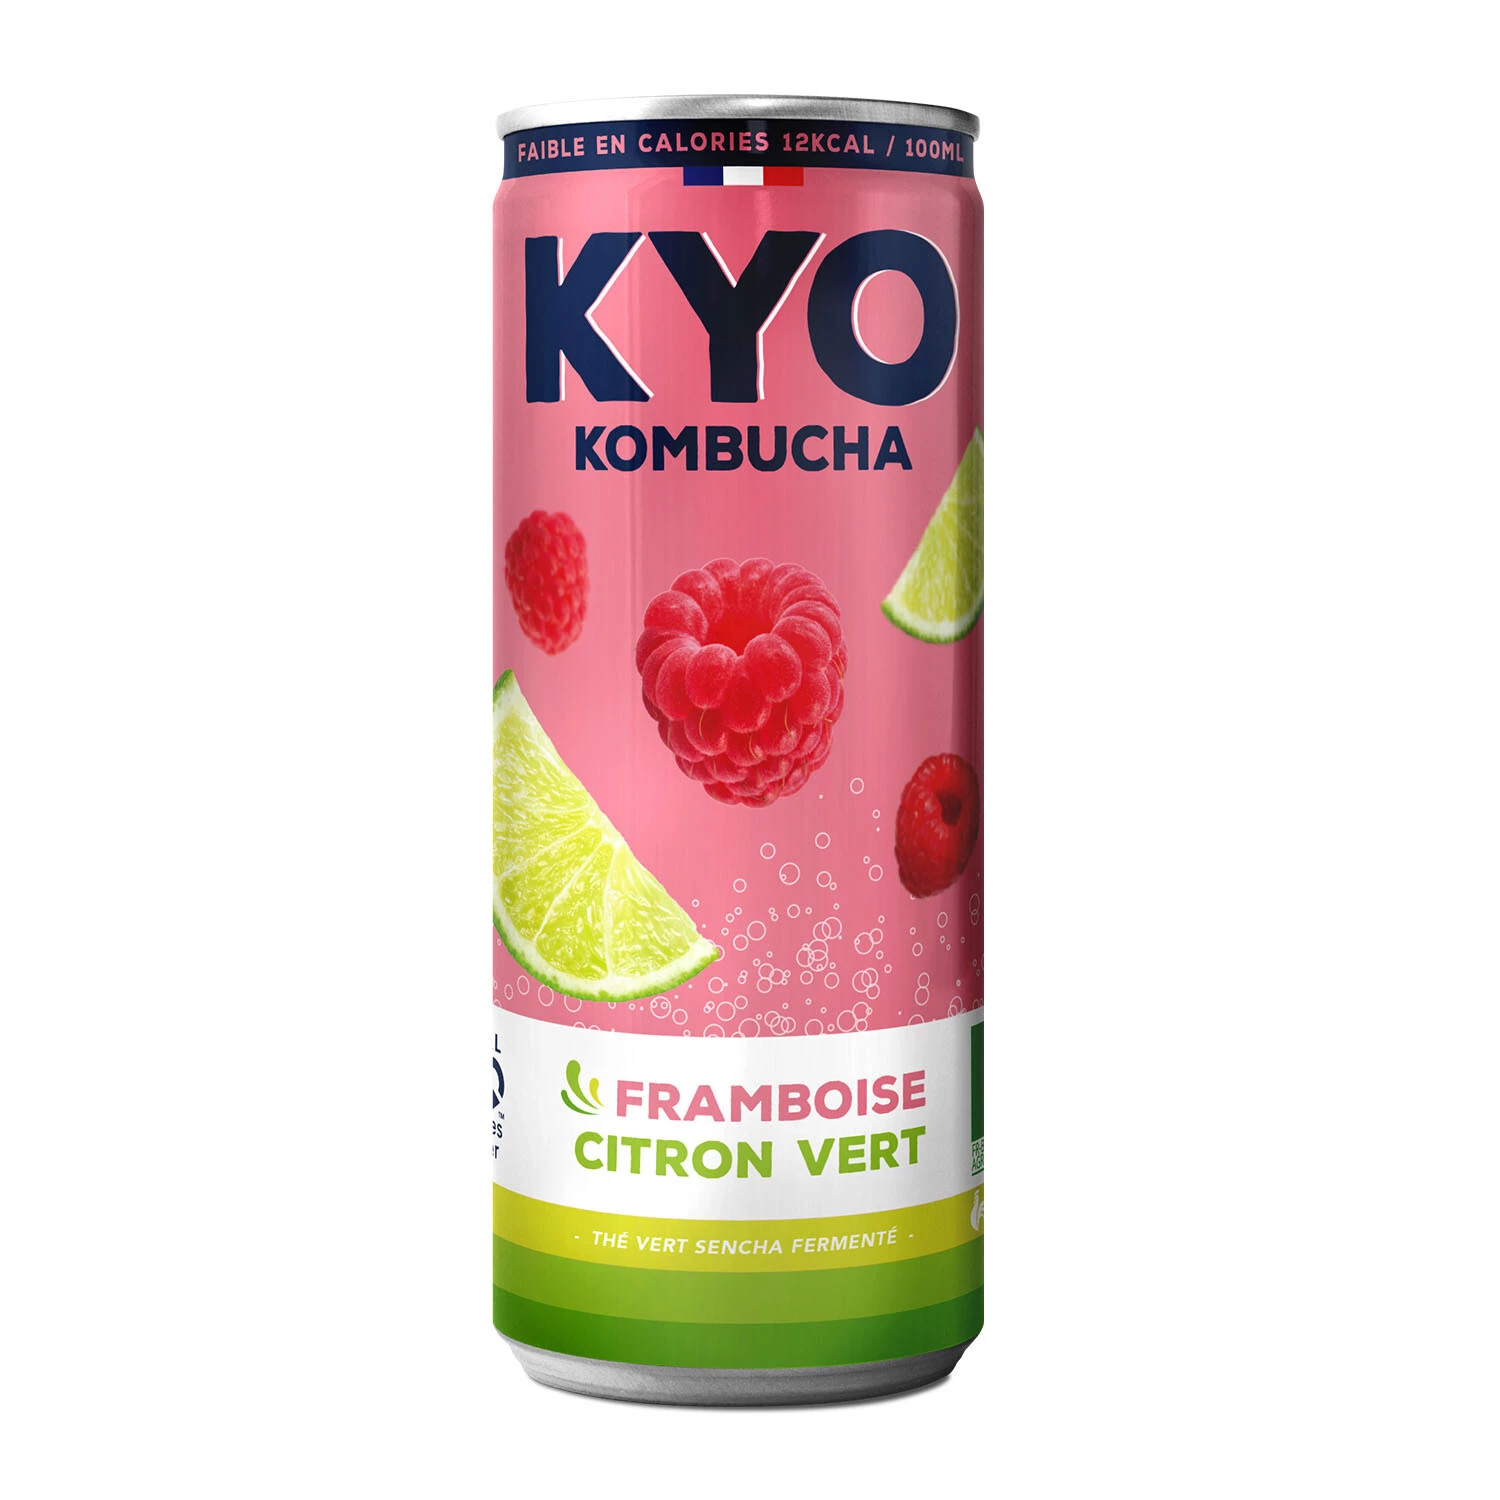 Can Raspberry Lime, 33cl -  KYO KOMBUCHA